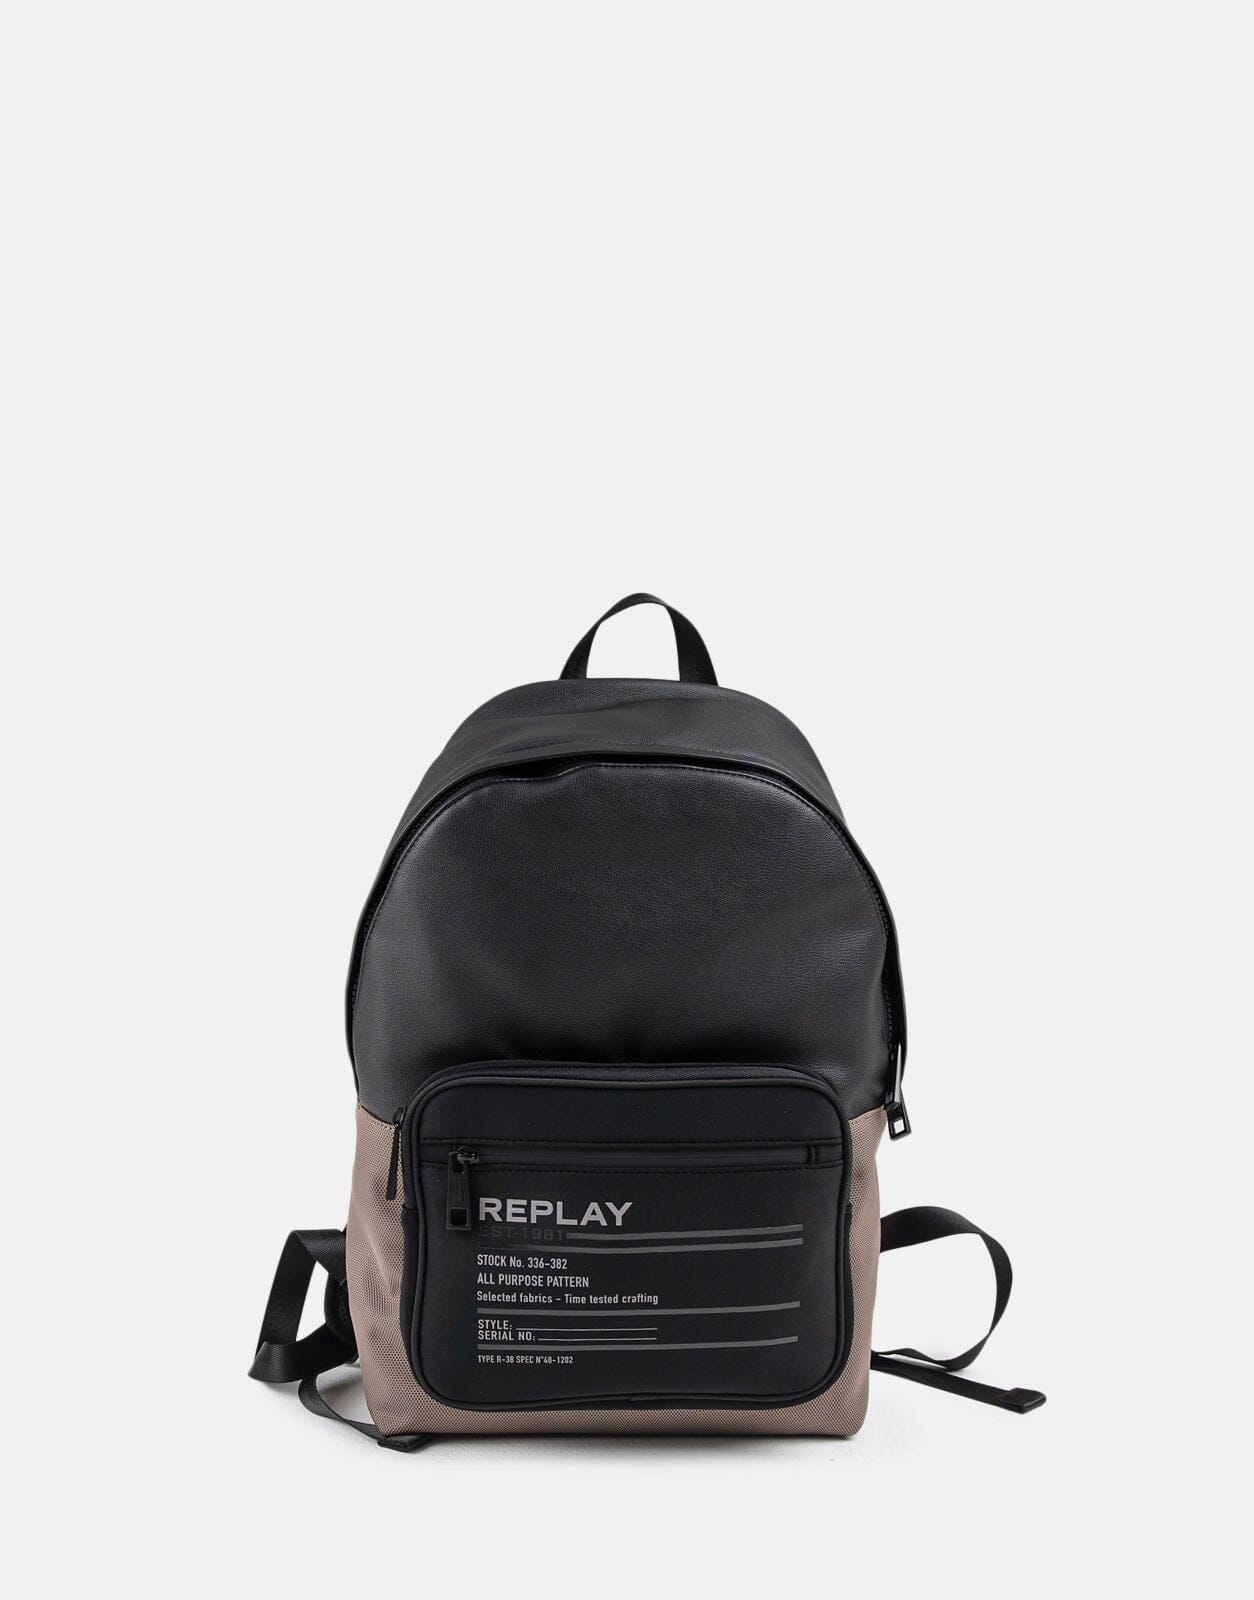 Replay Black Backpack Bag - Subwear